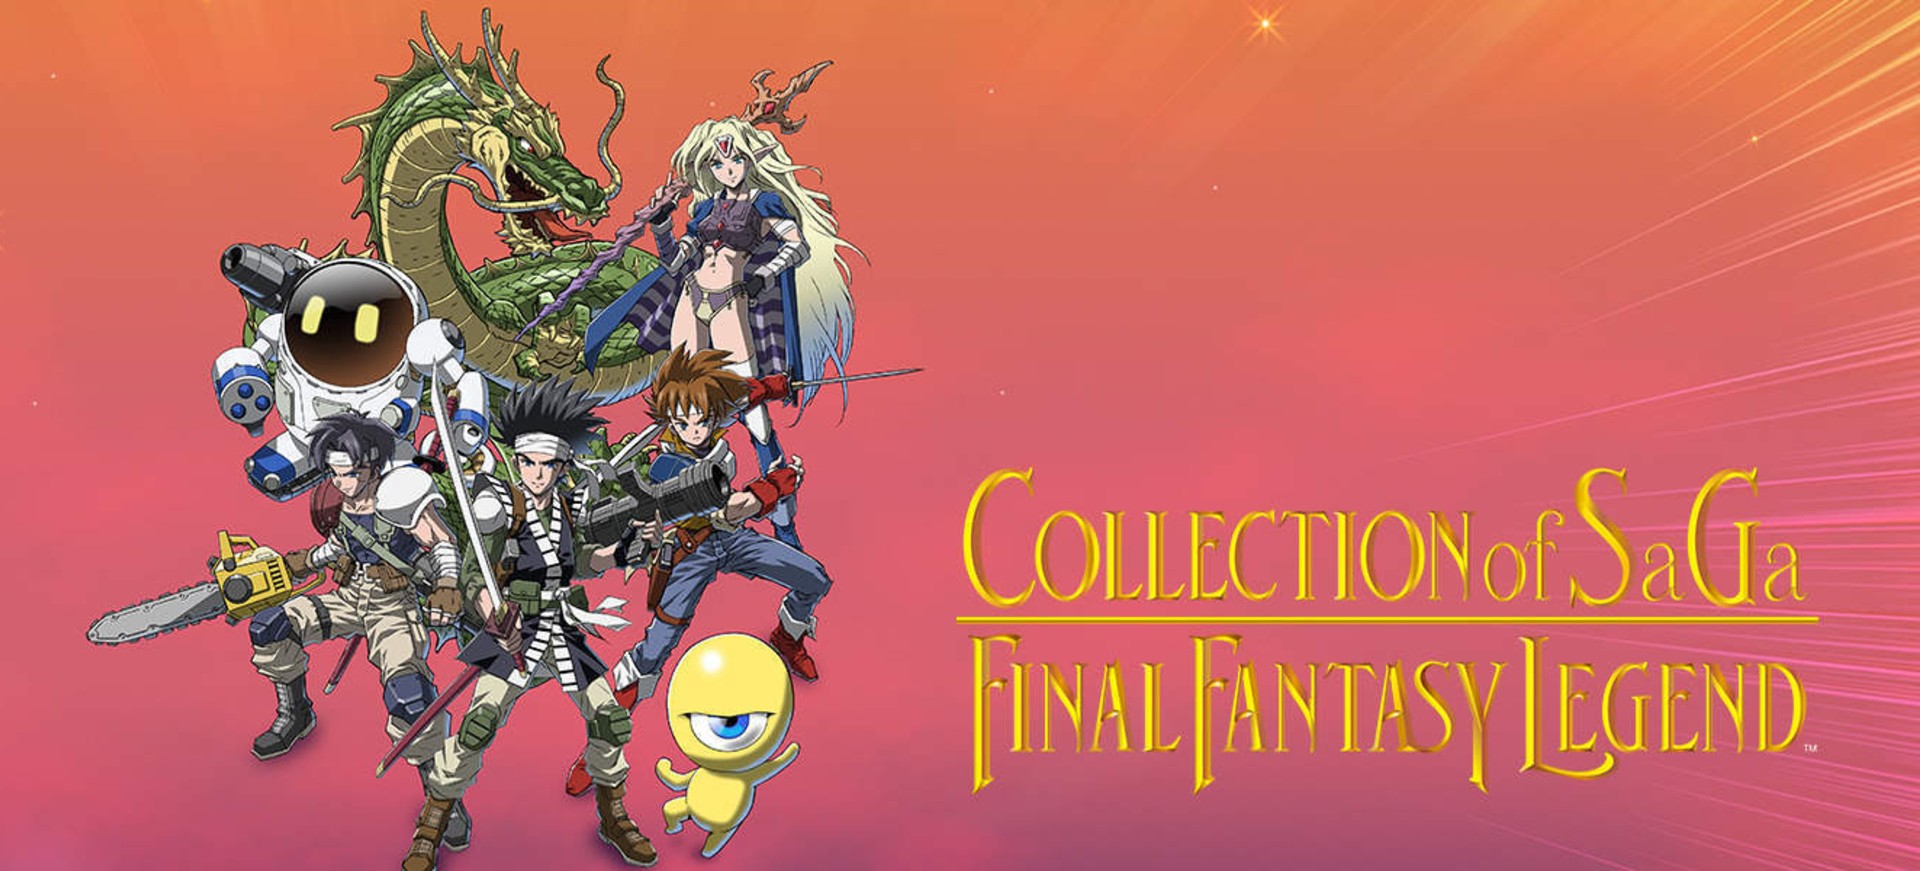 Collection of SaGa: Final Fantasy Legend จะวางจำหน่ายให้กับเครื่องอื่น ๆ นอกเหนือ Nintendo Switch ด้วย